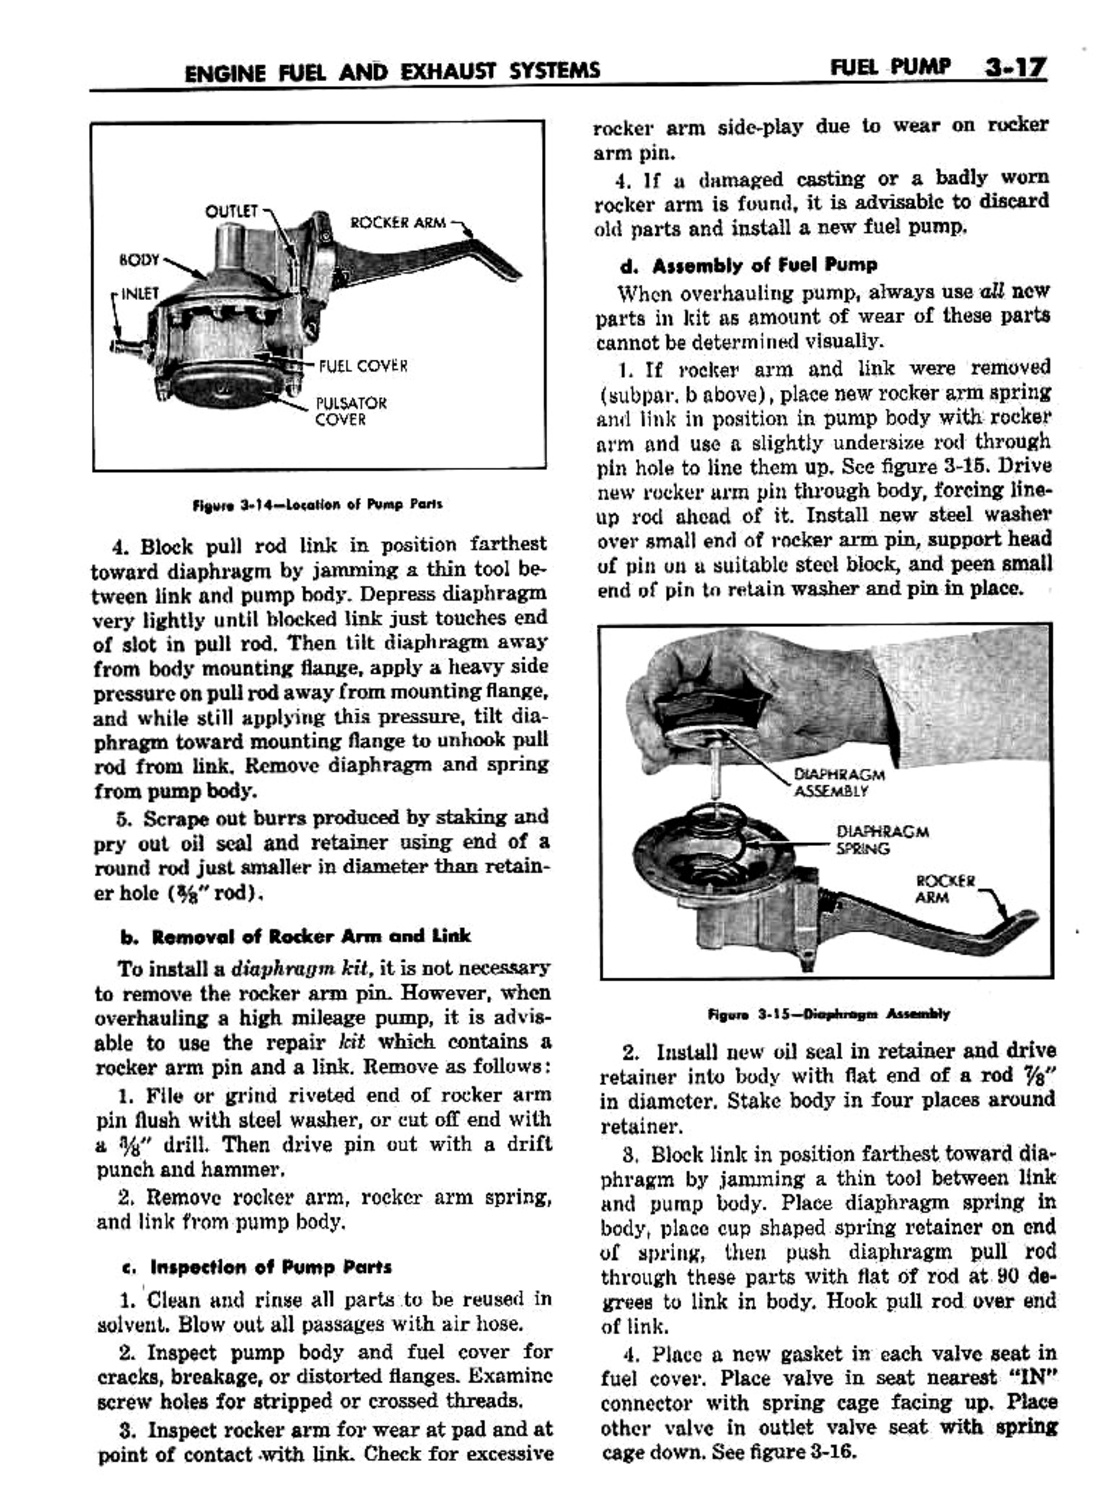 n_04 1959 Buick Shop Manual - Engine Fuel & Exhaust-017-017.jpg